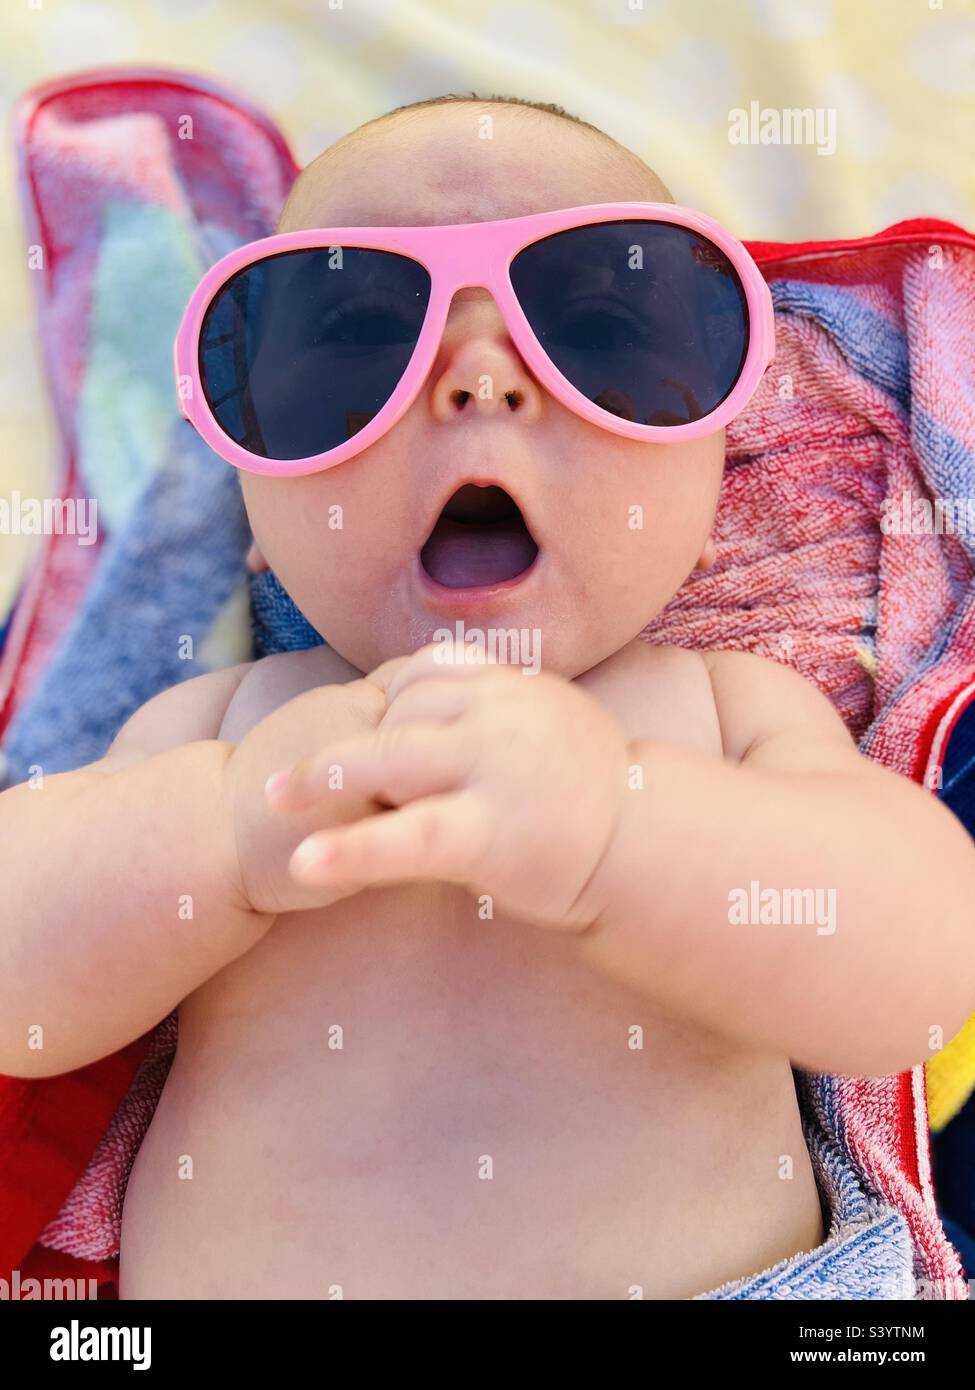 Baby girl in pink sun glasses Stock Photo